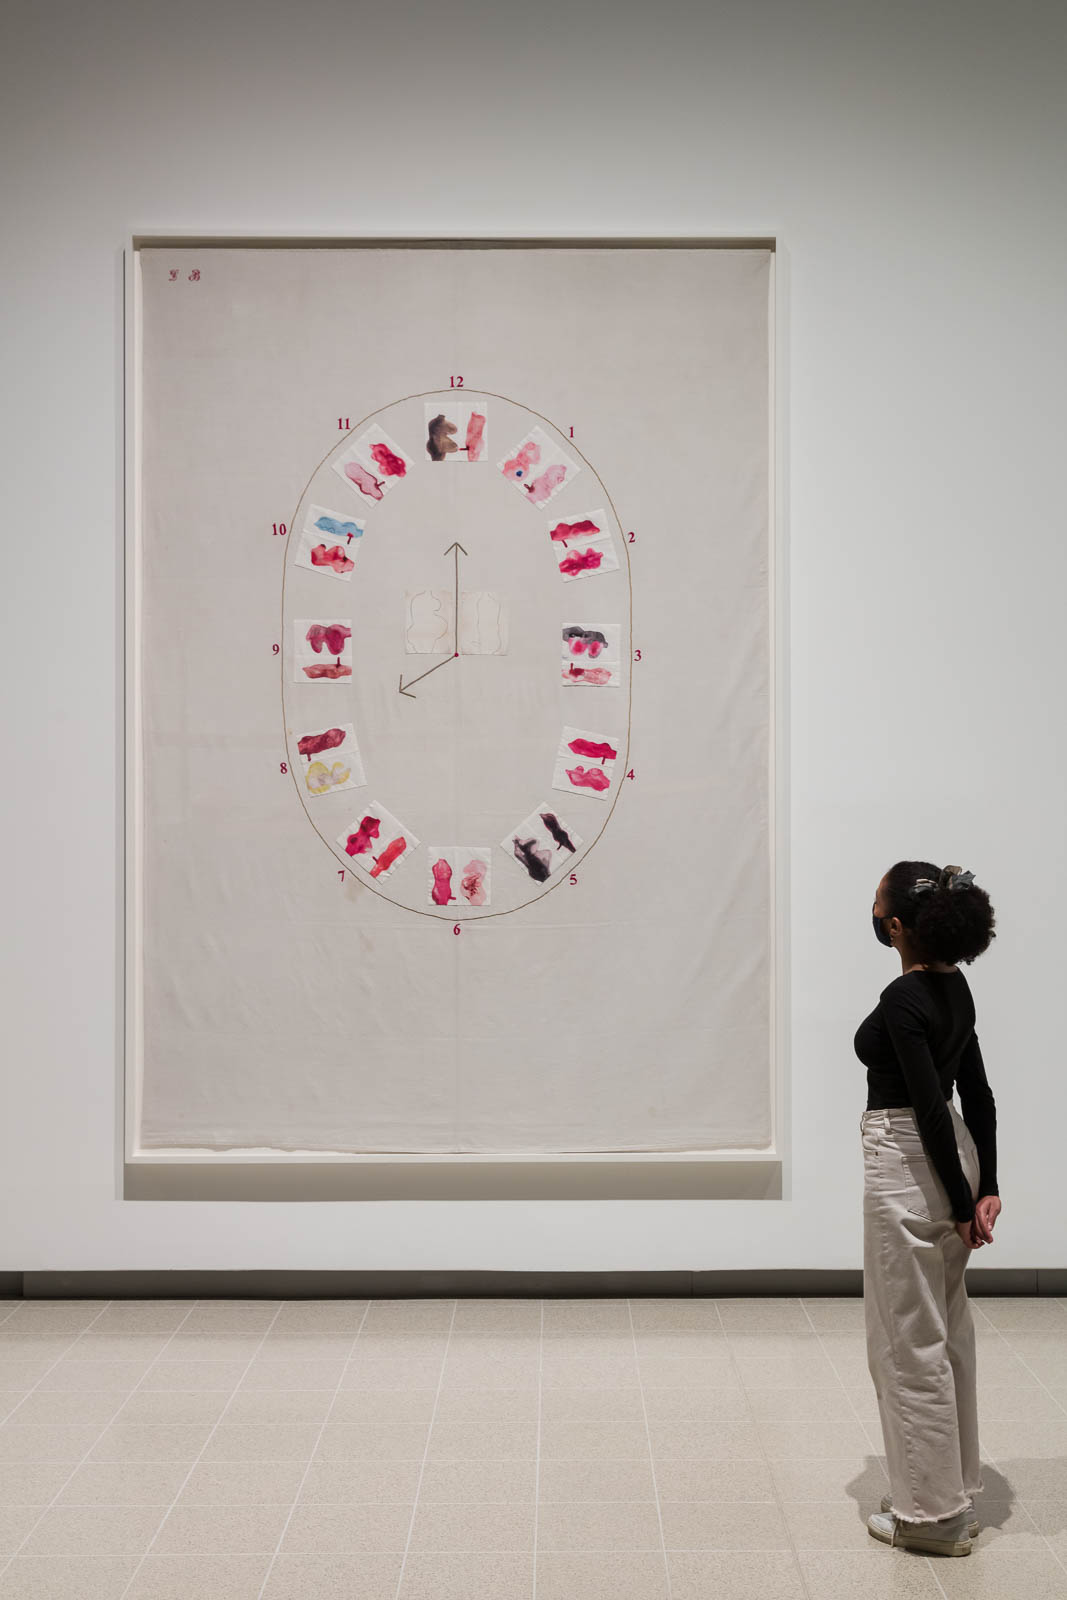 Louise Bourgeois: The Woven Child at the Hayward Gallery, London - Artvisor